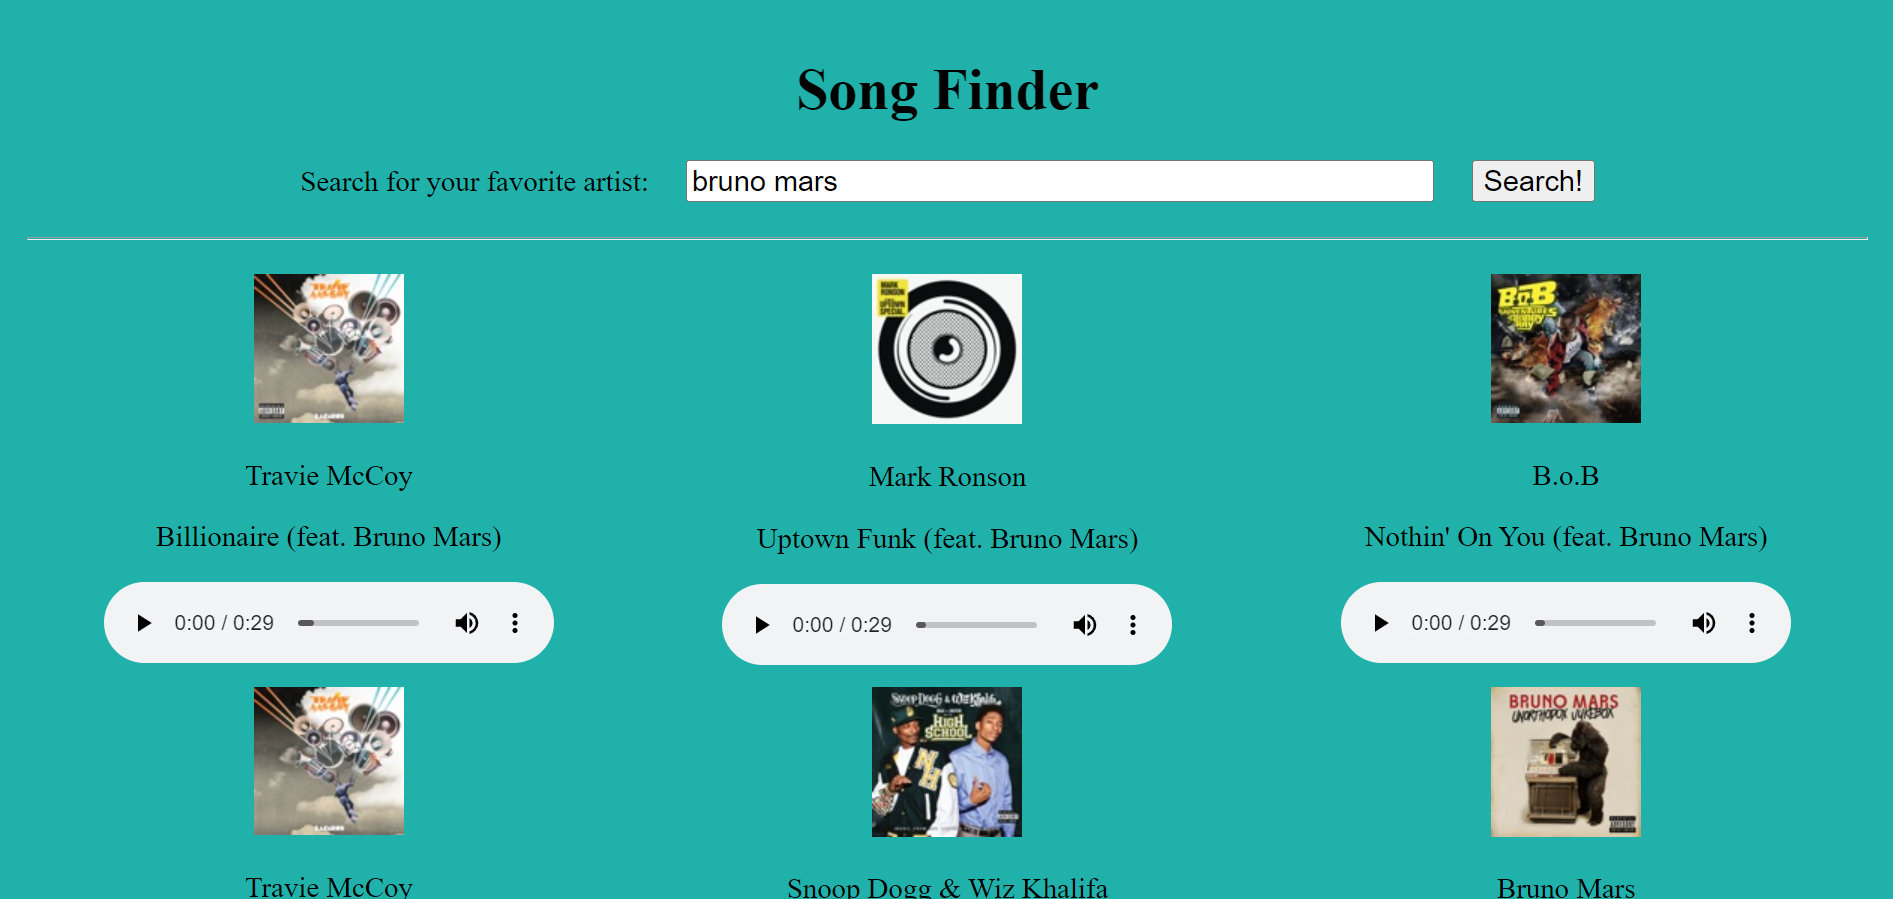 Image of song finder